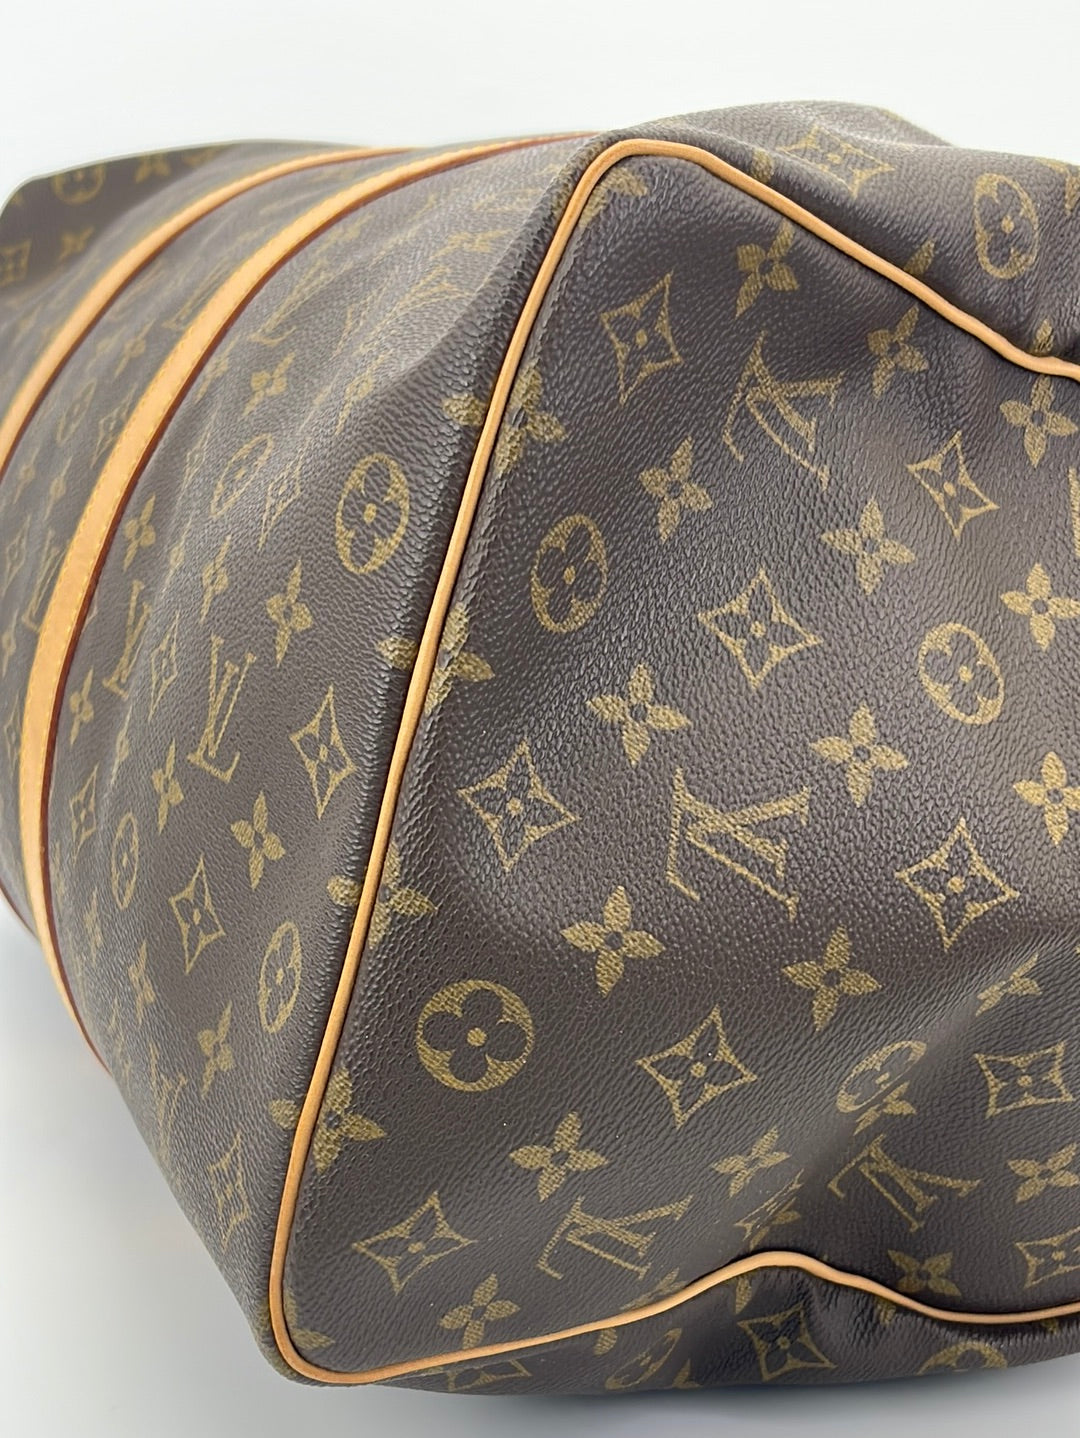 PRELOVED Louis Vuitton Keepall  50 Monogram Duffel Bag FL0012 040523